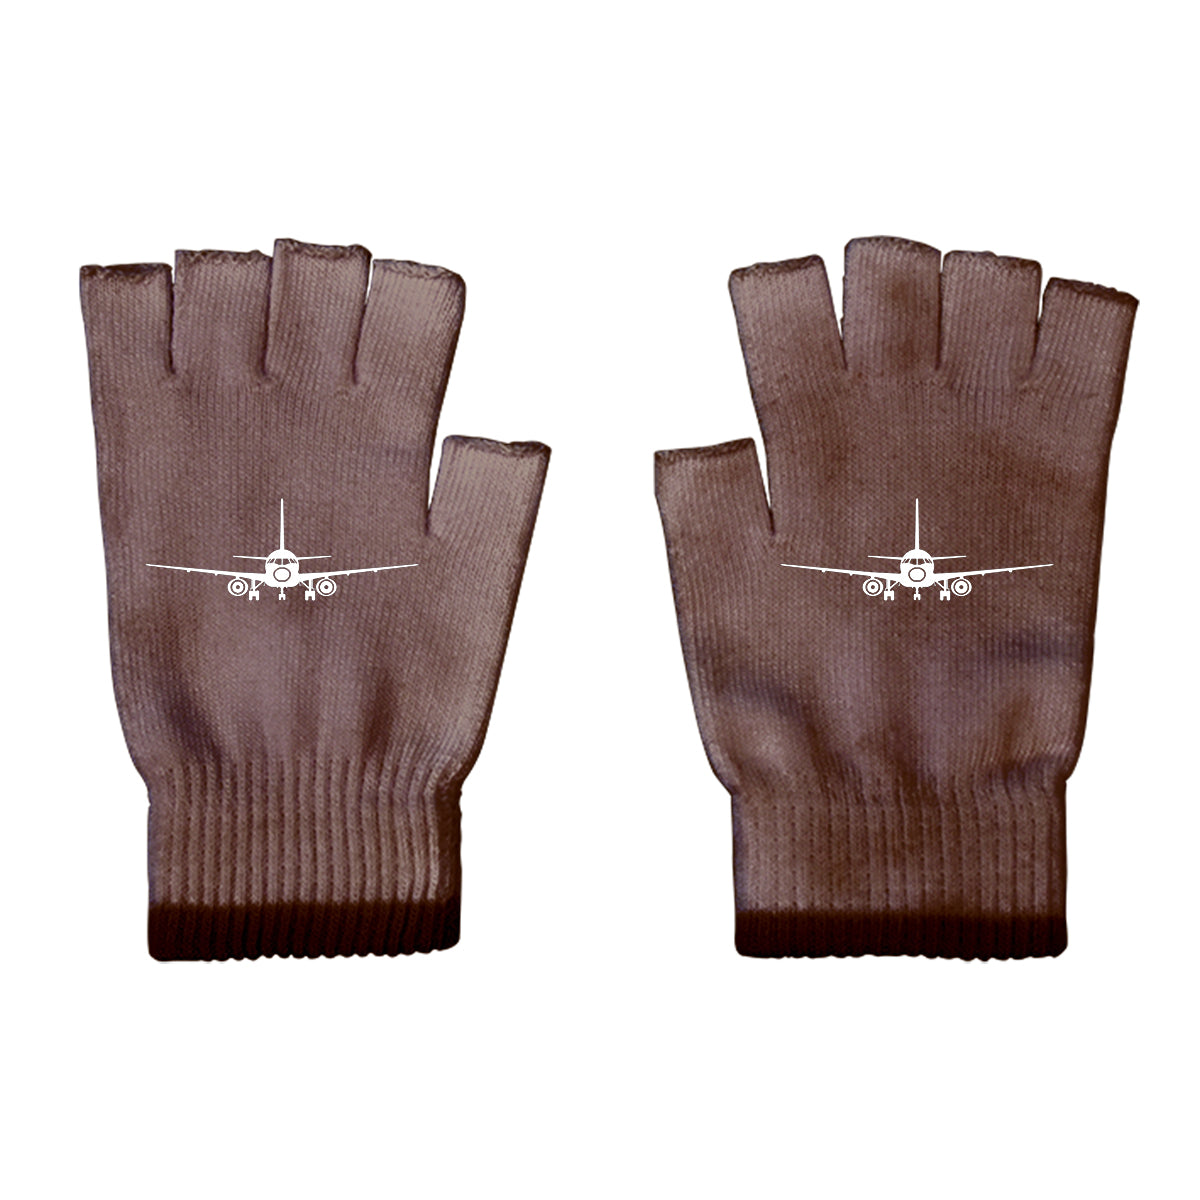 Sukhoi Superjet 100 Silhouette Designed Cut Gloves